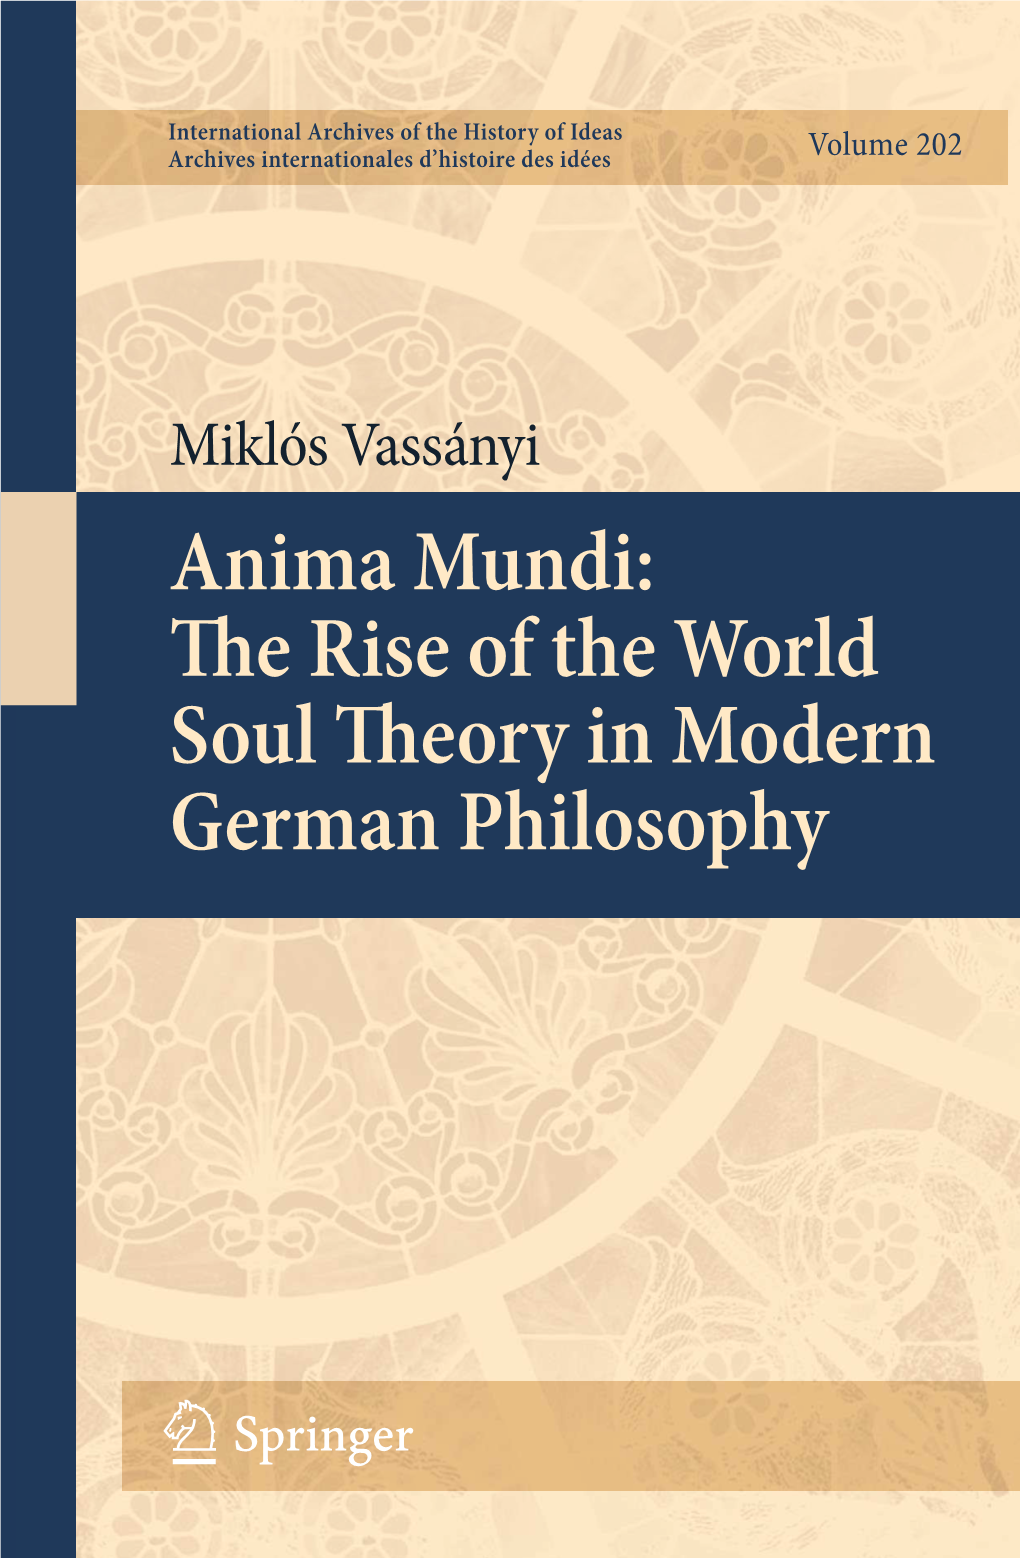 Anima Mundi: 1 H E Rise of the World Soul H Eory in Modern German Philosophy